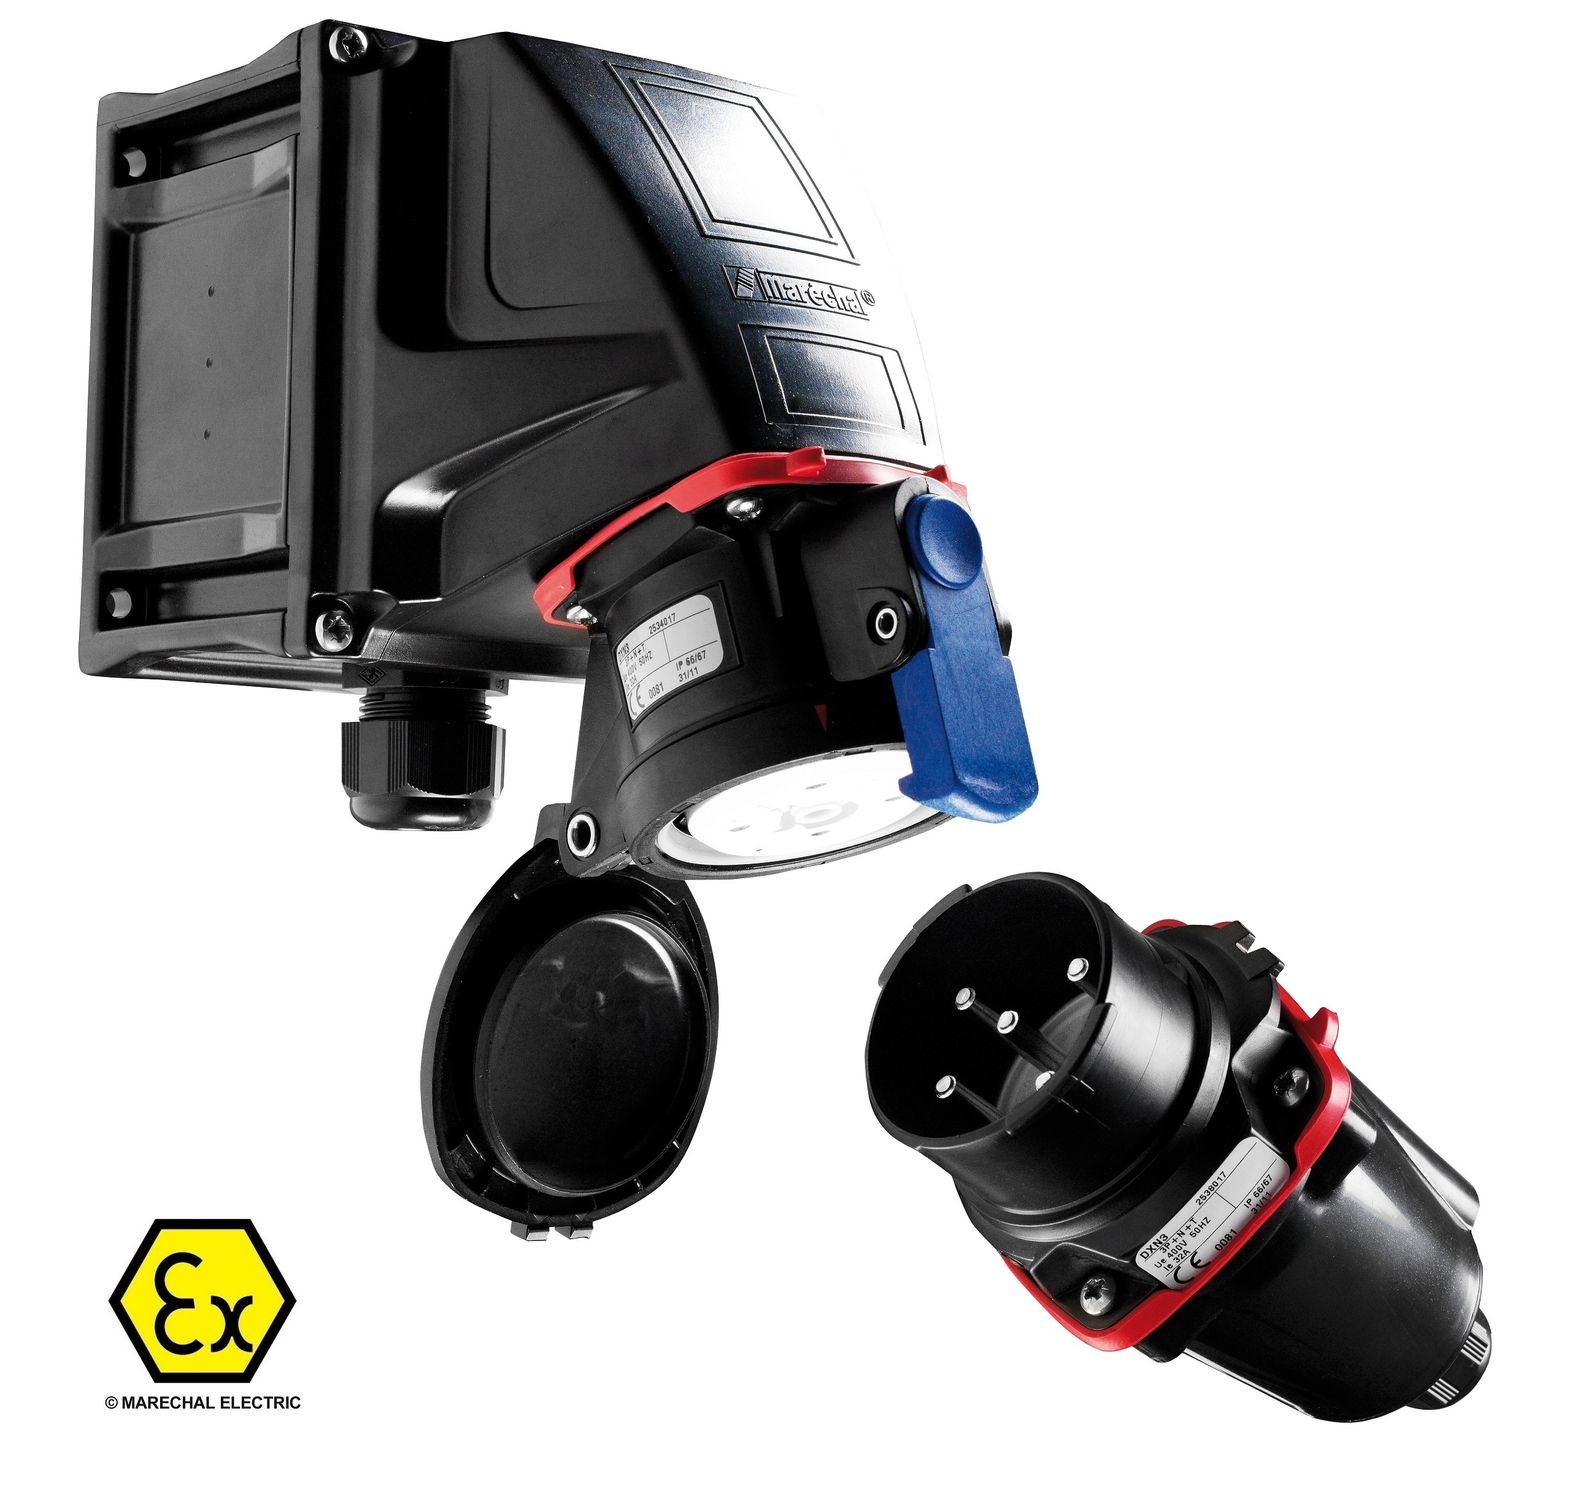 ATEX Plugs & Sockets : Marechal DXN1 20Amp Plug & Sockets for Hazardous Area Zone 1 & 2